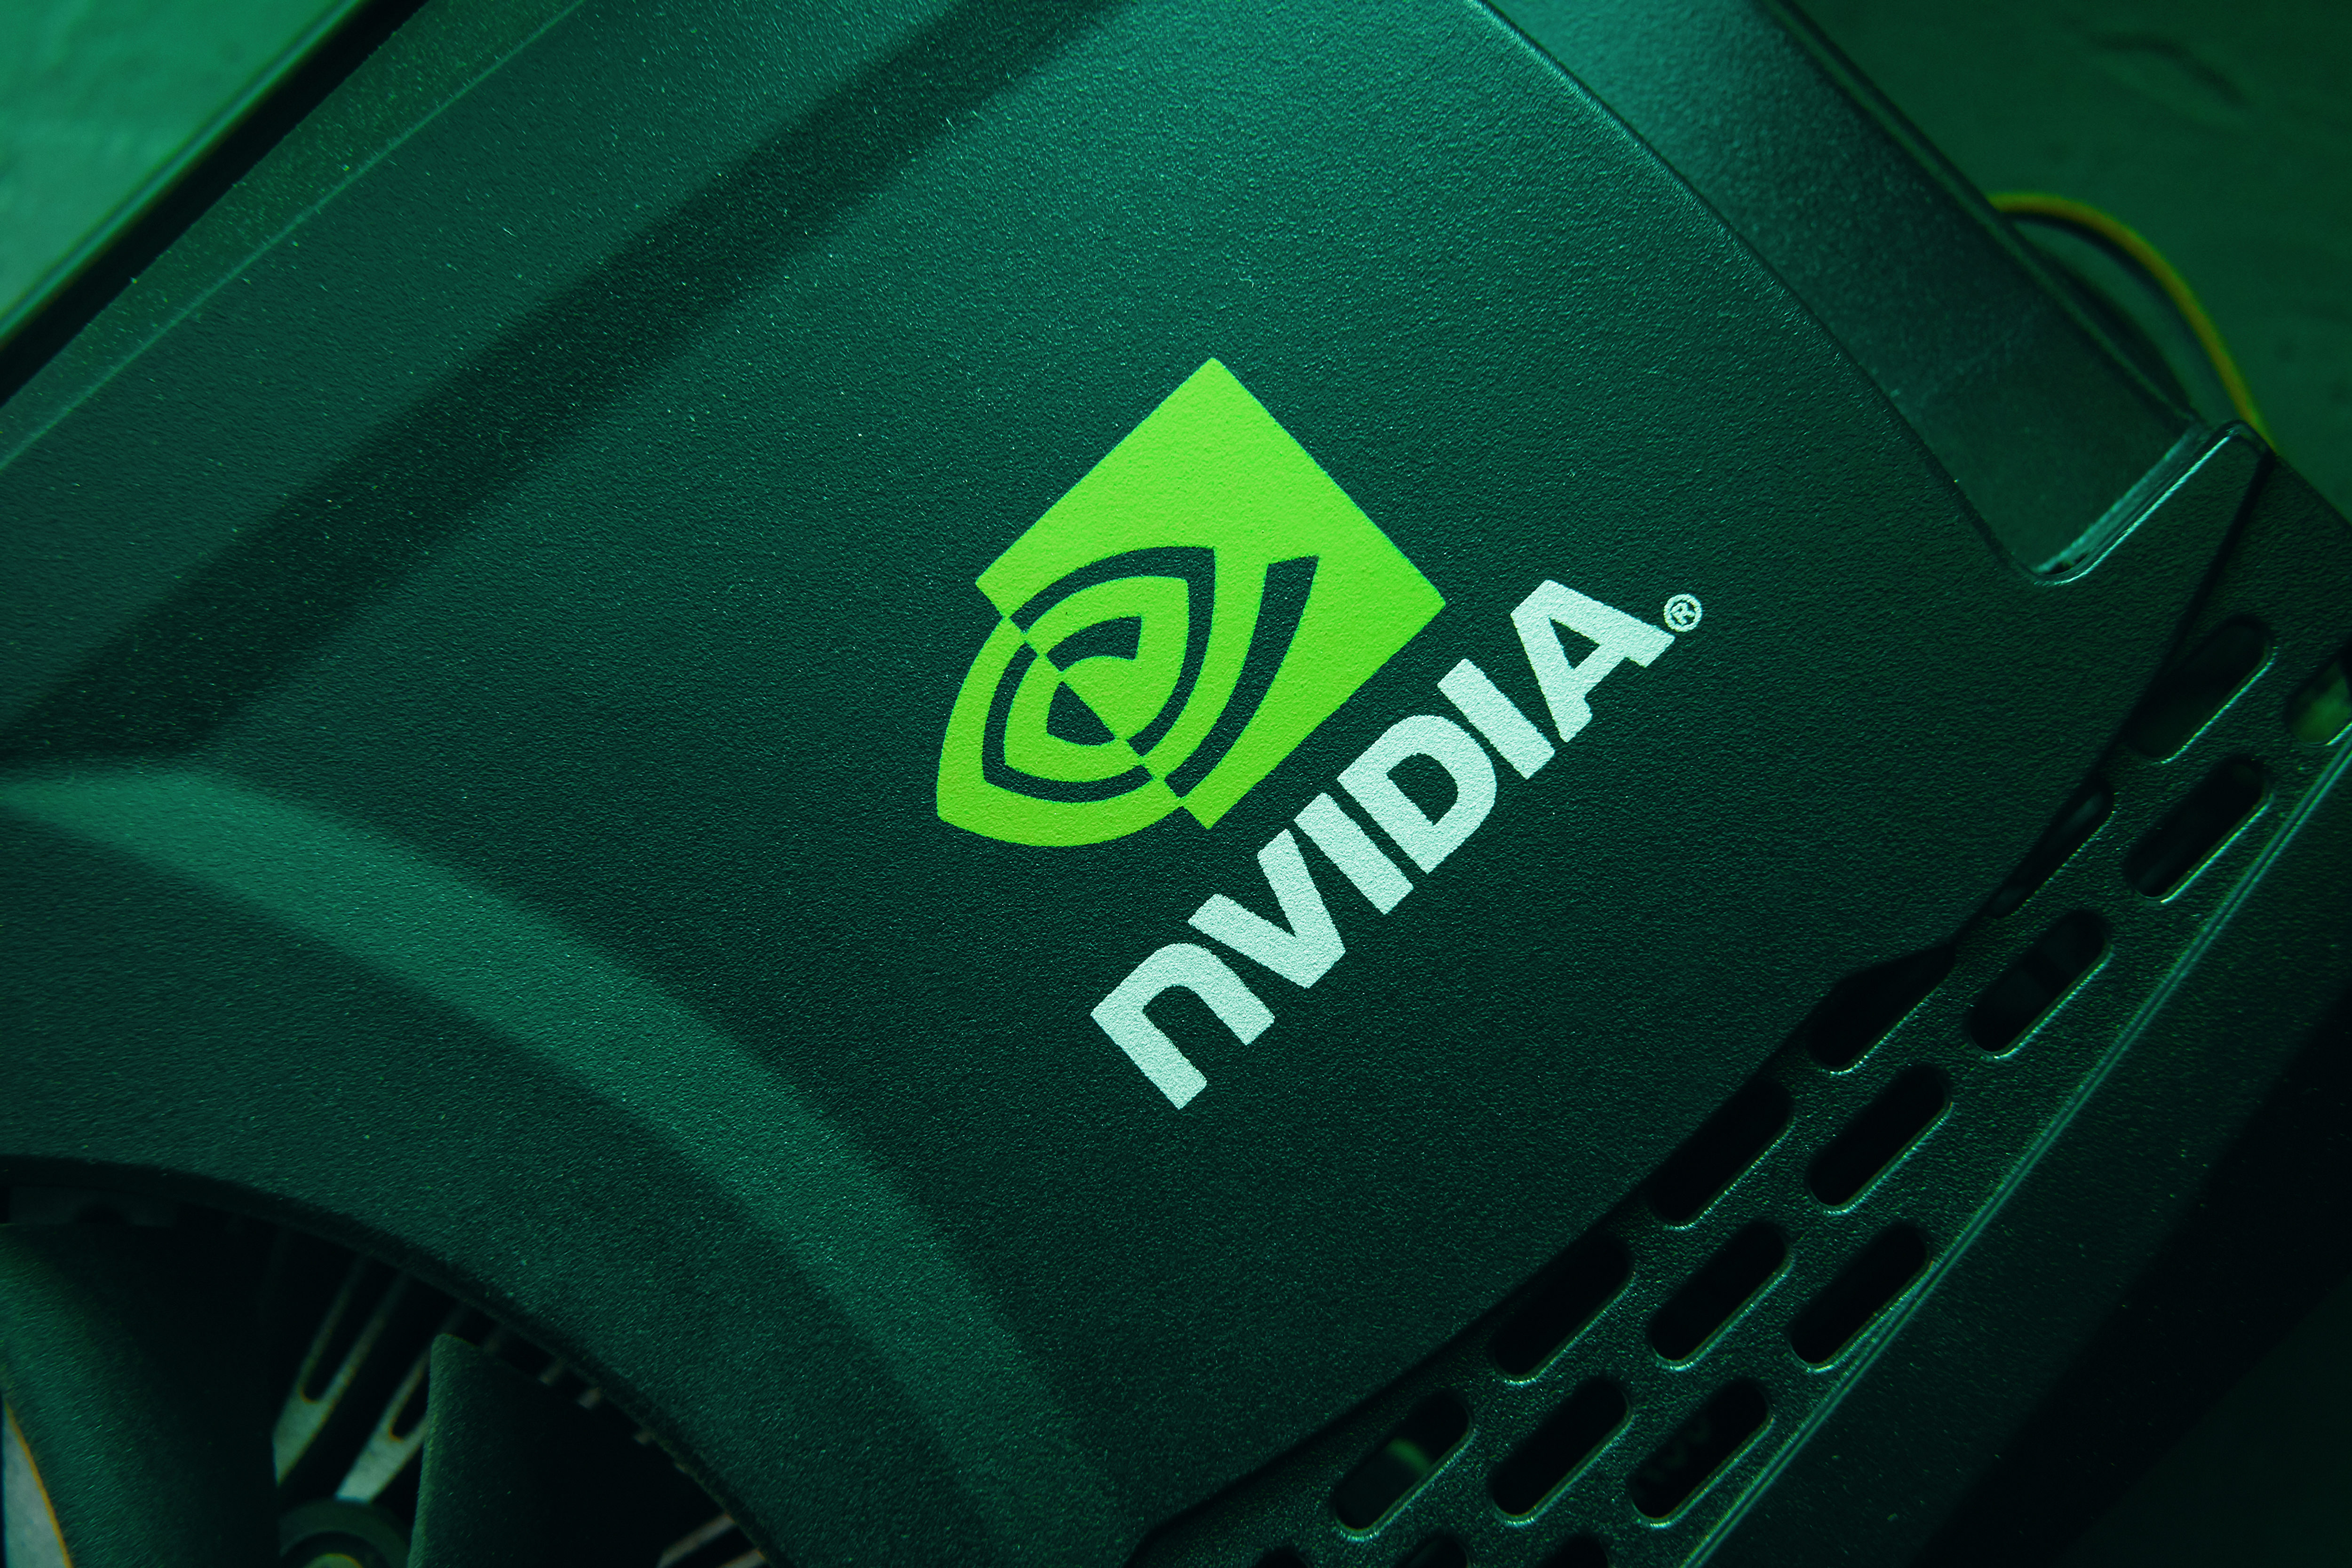 2021 2 nvidia green logo on graphics card closeup 638c66b18615ae71282ae585